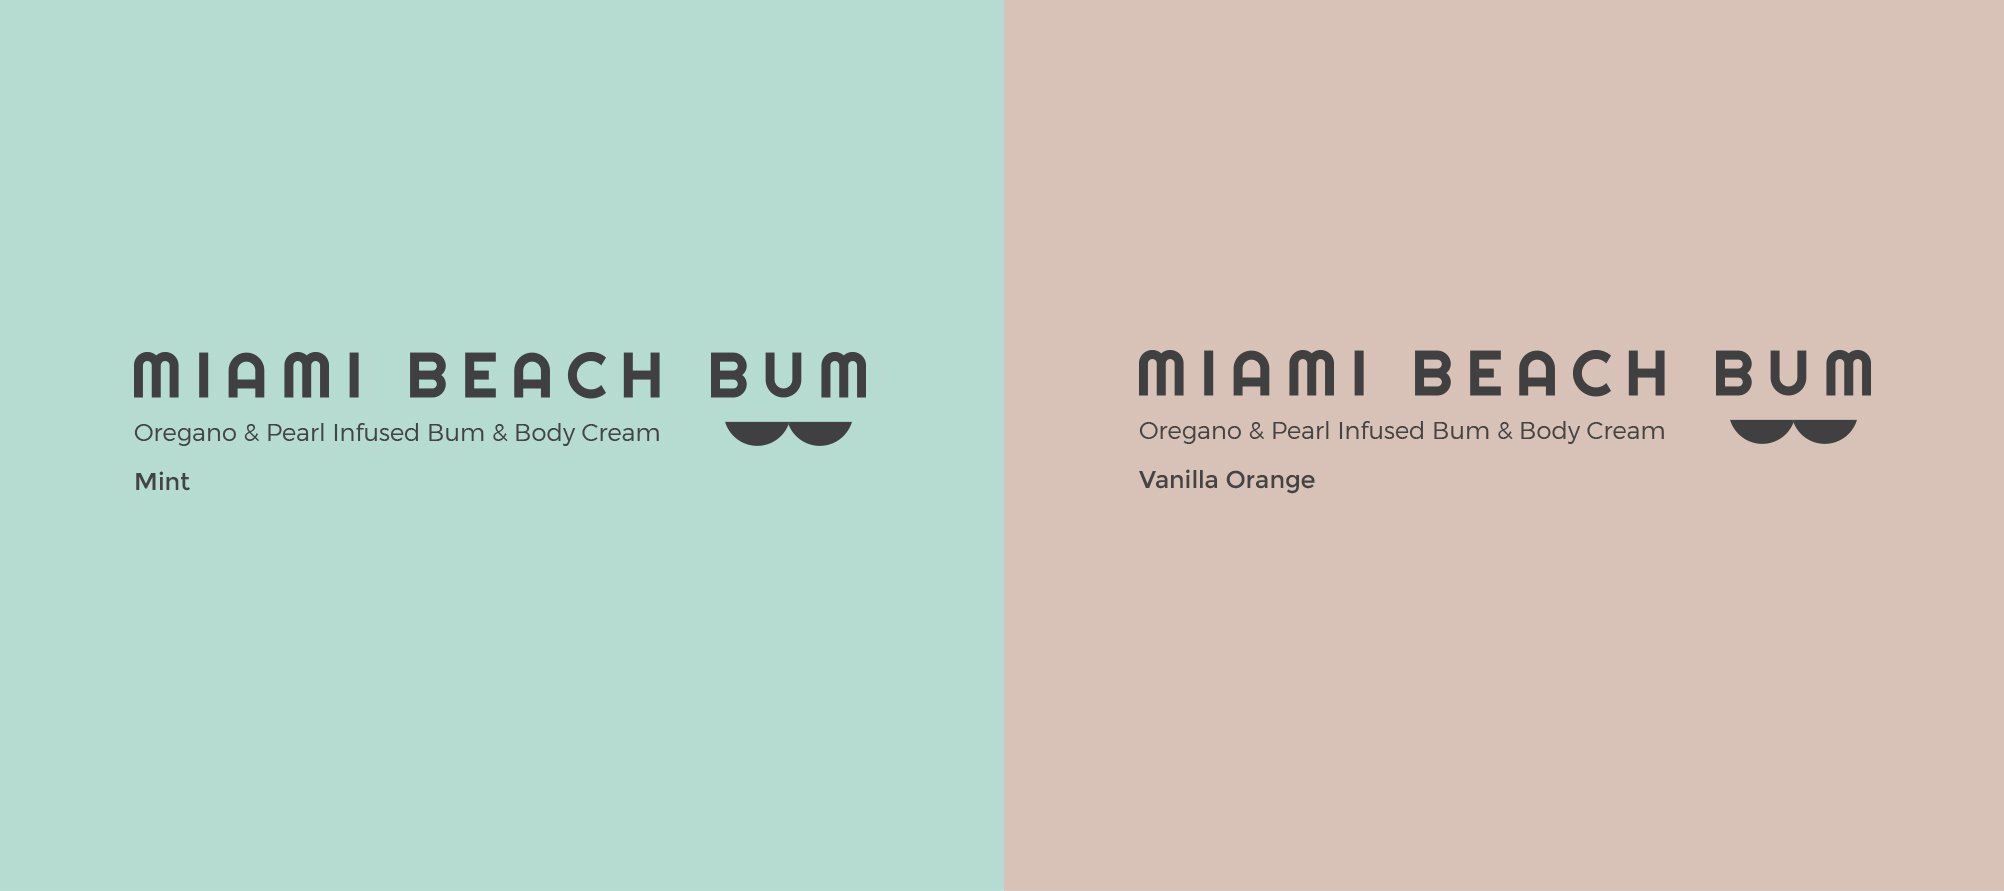 Miami Beach Bum Label Mint and Vanilla Orange